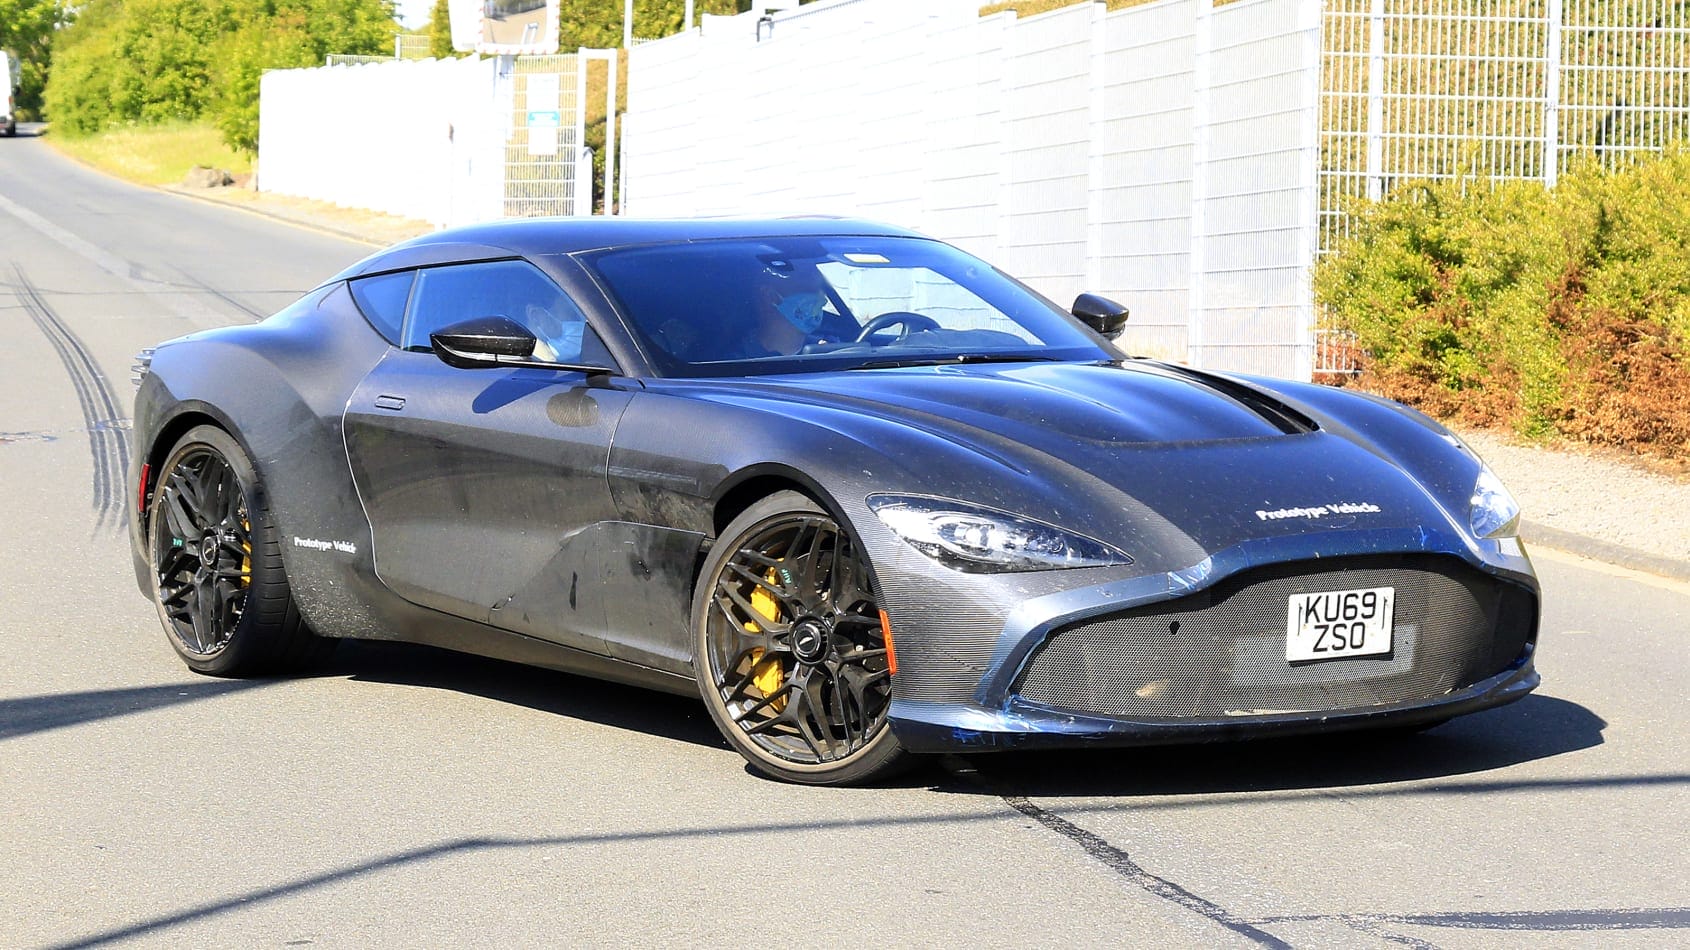 aria-label="Aston Martin DBS GT Zagato spies 3"